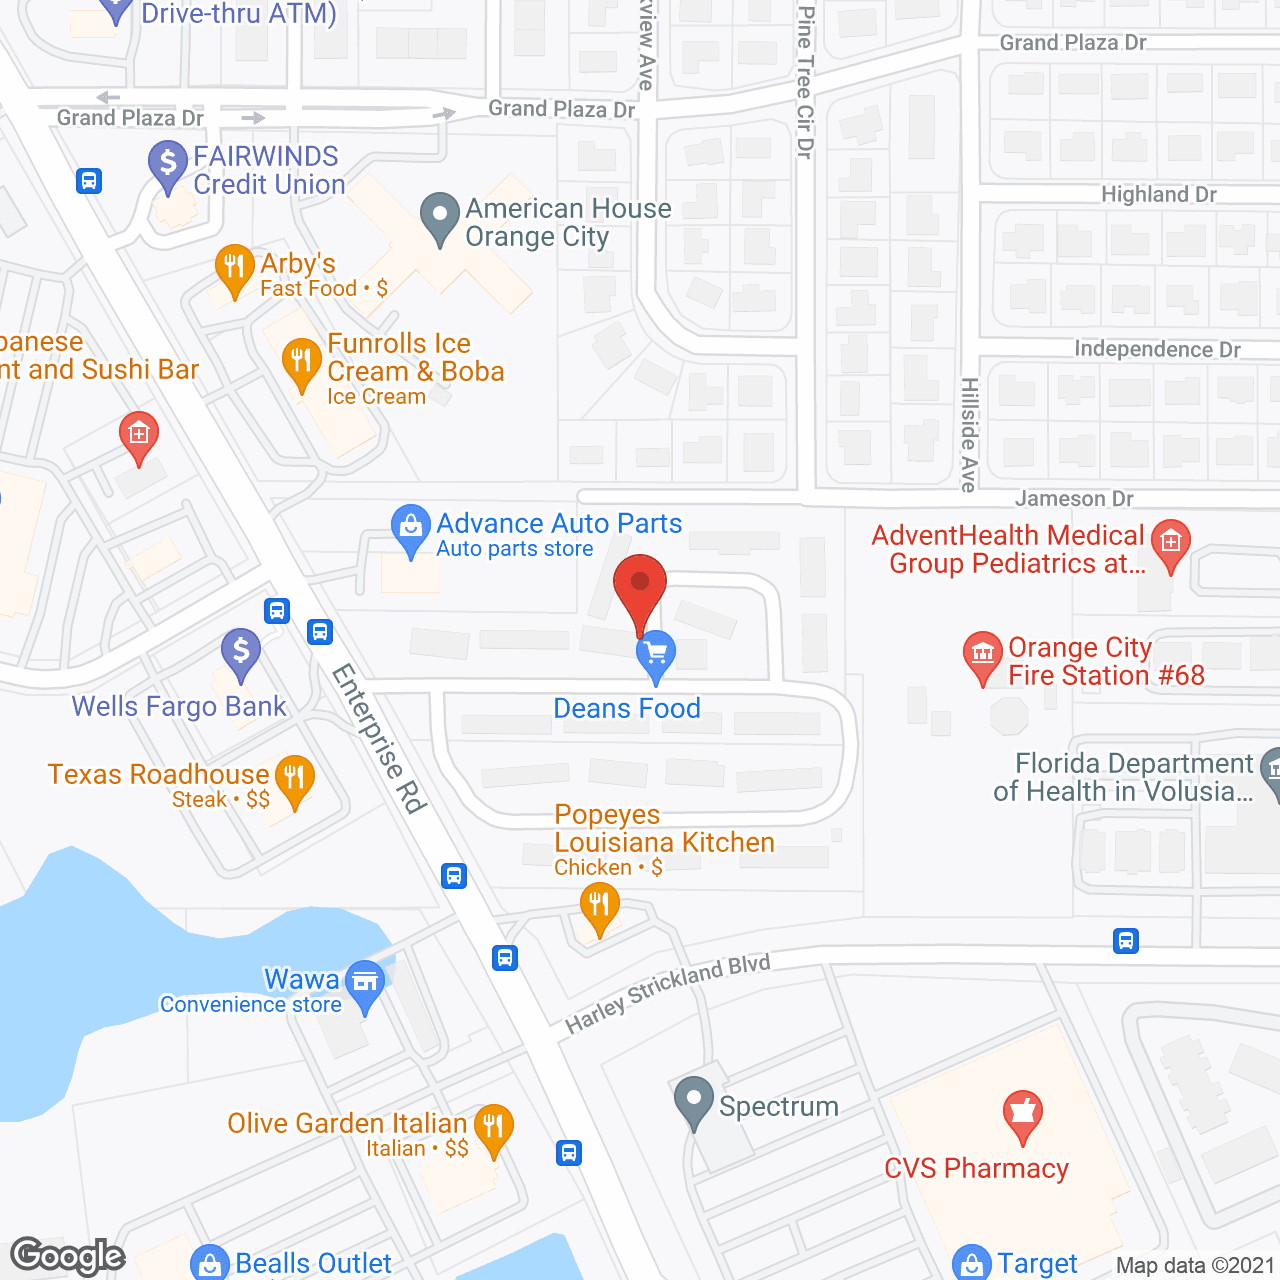 Villas of Orange City in google map